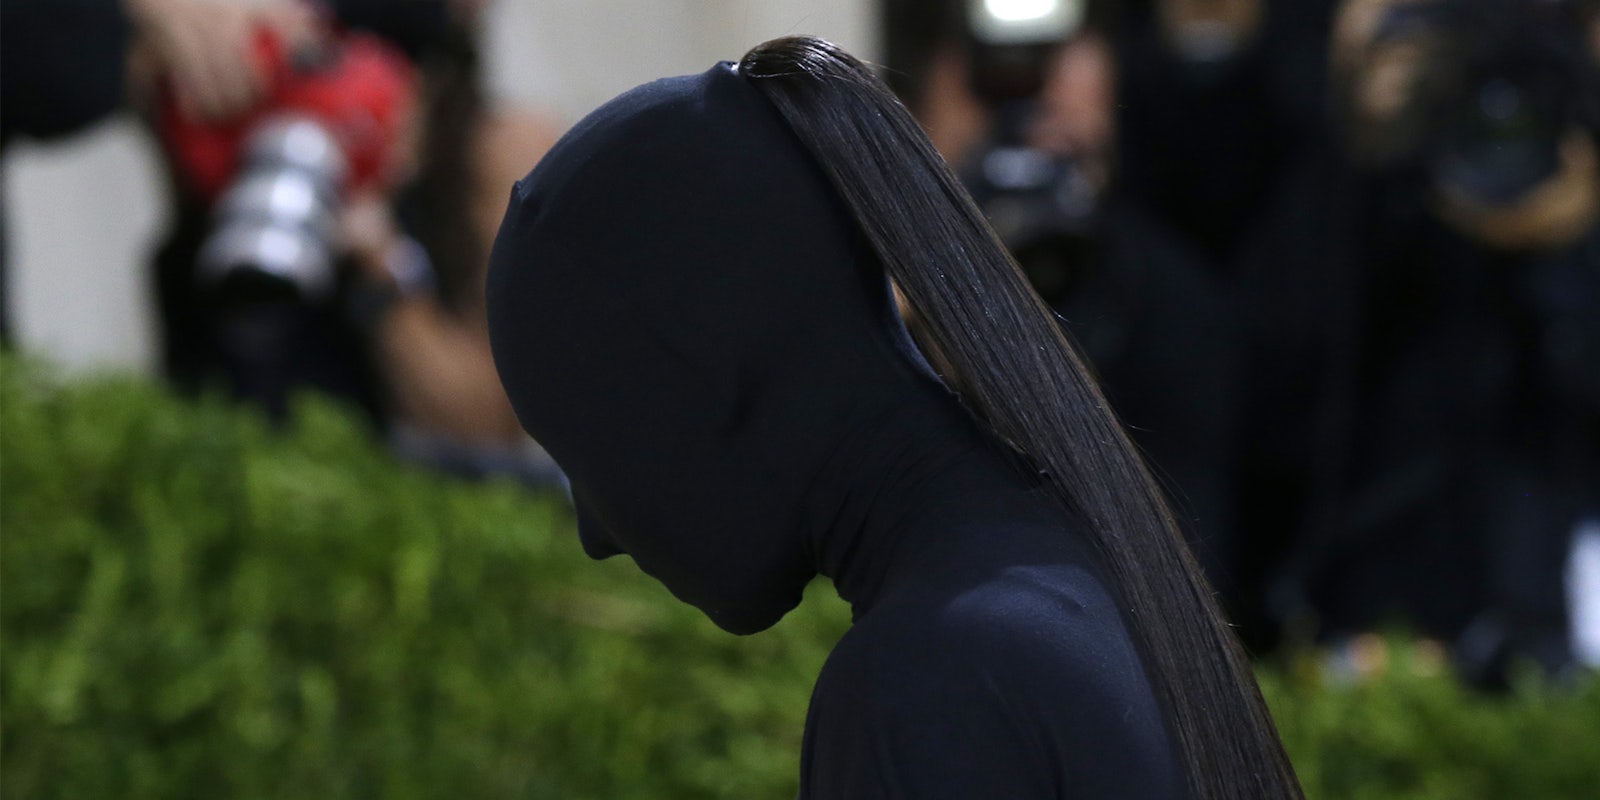 Kim Kardashian arrives on the red carpet for The Met Gala